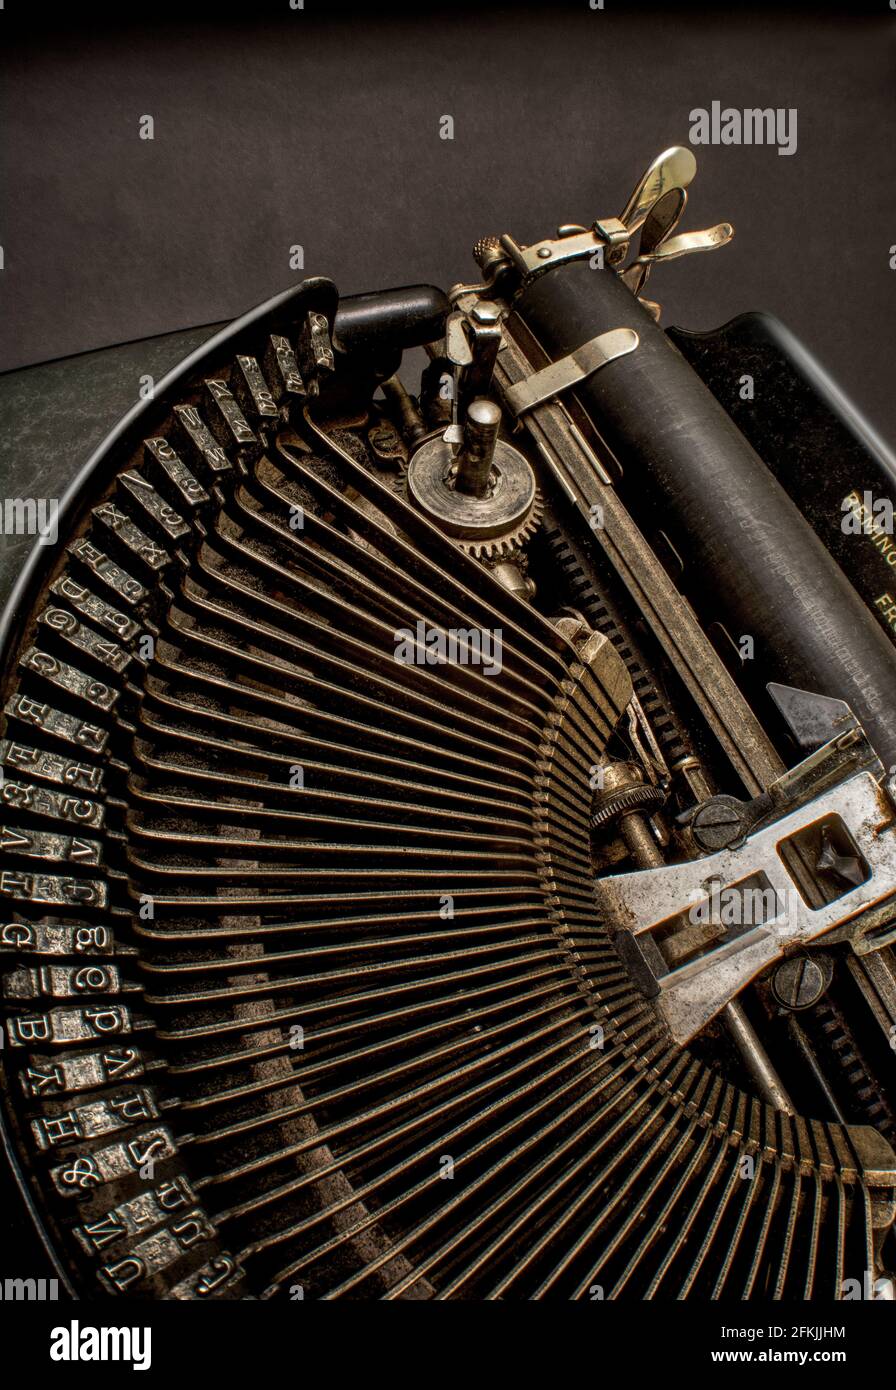 Old and redundant manual typewriter Stock Photo